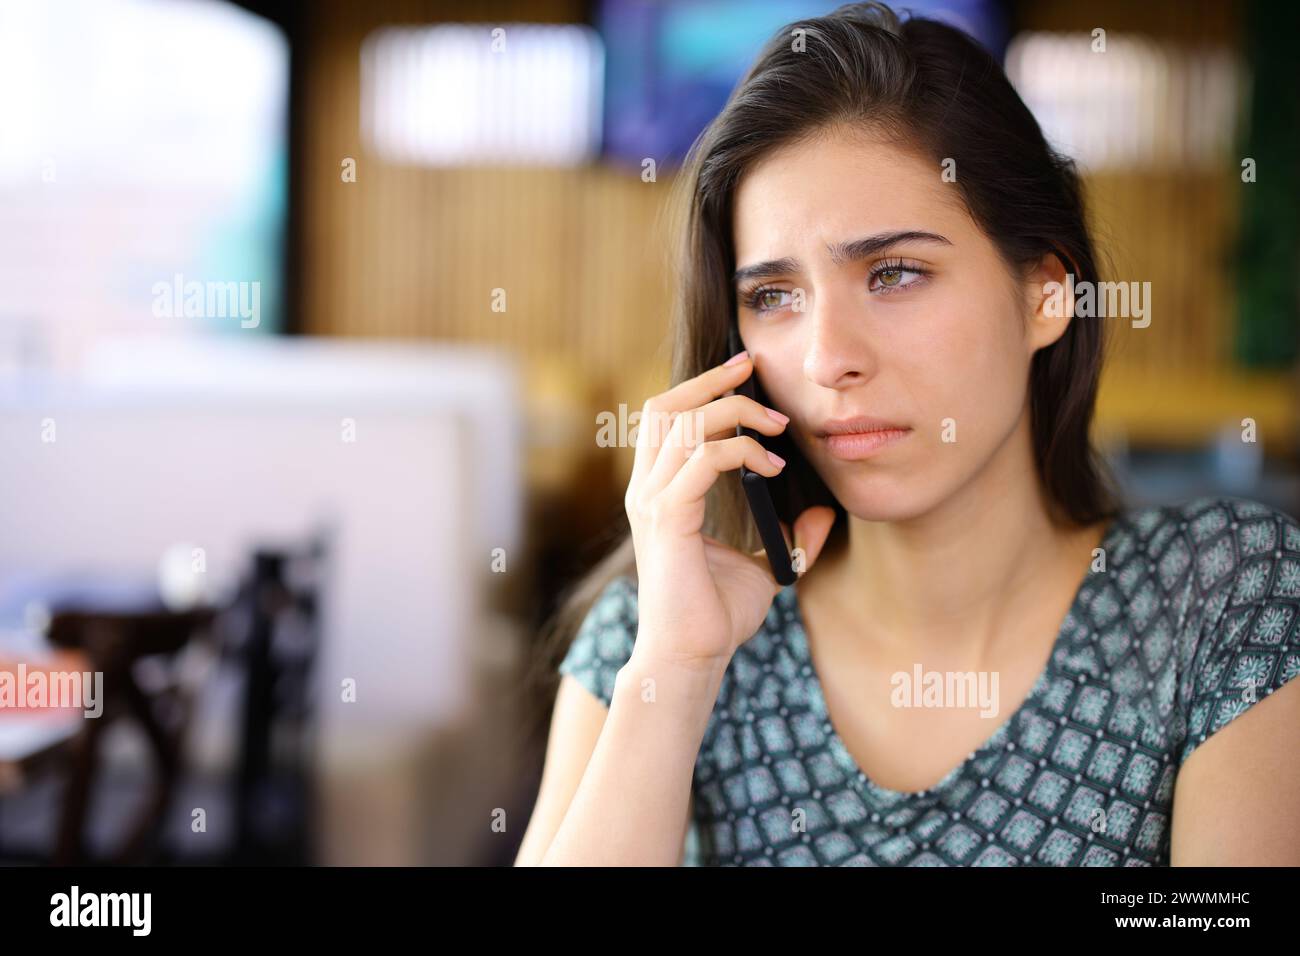 Sad woman talking on phone in a bar interior Stock Photo